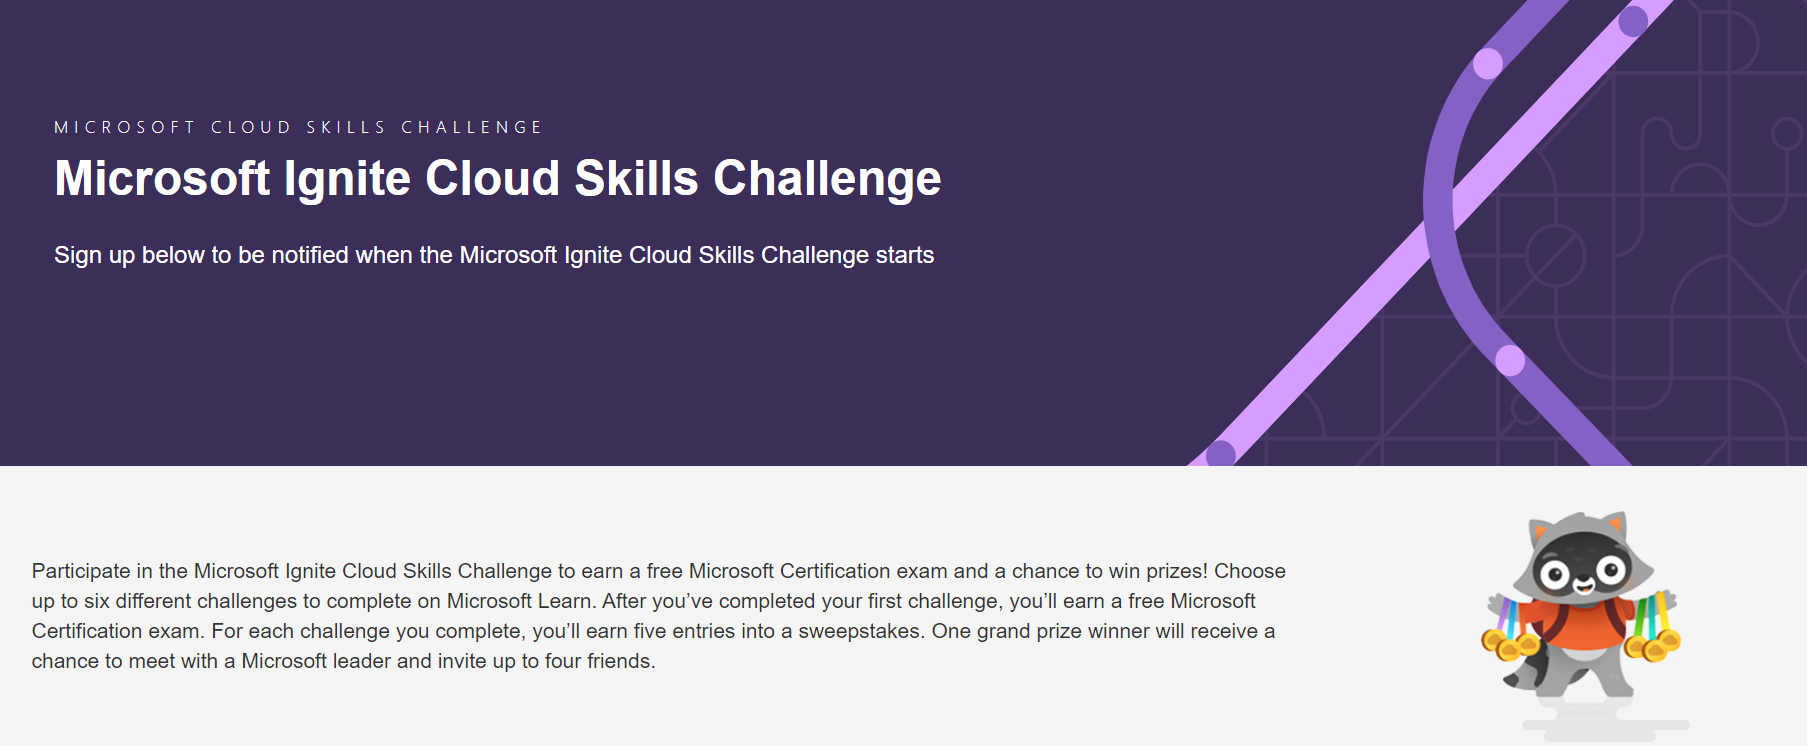 Microsoft Ignite Cloud Skills Challenge